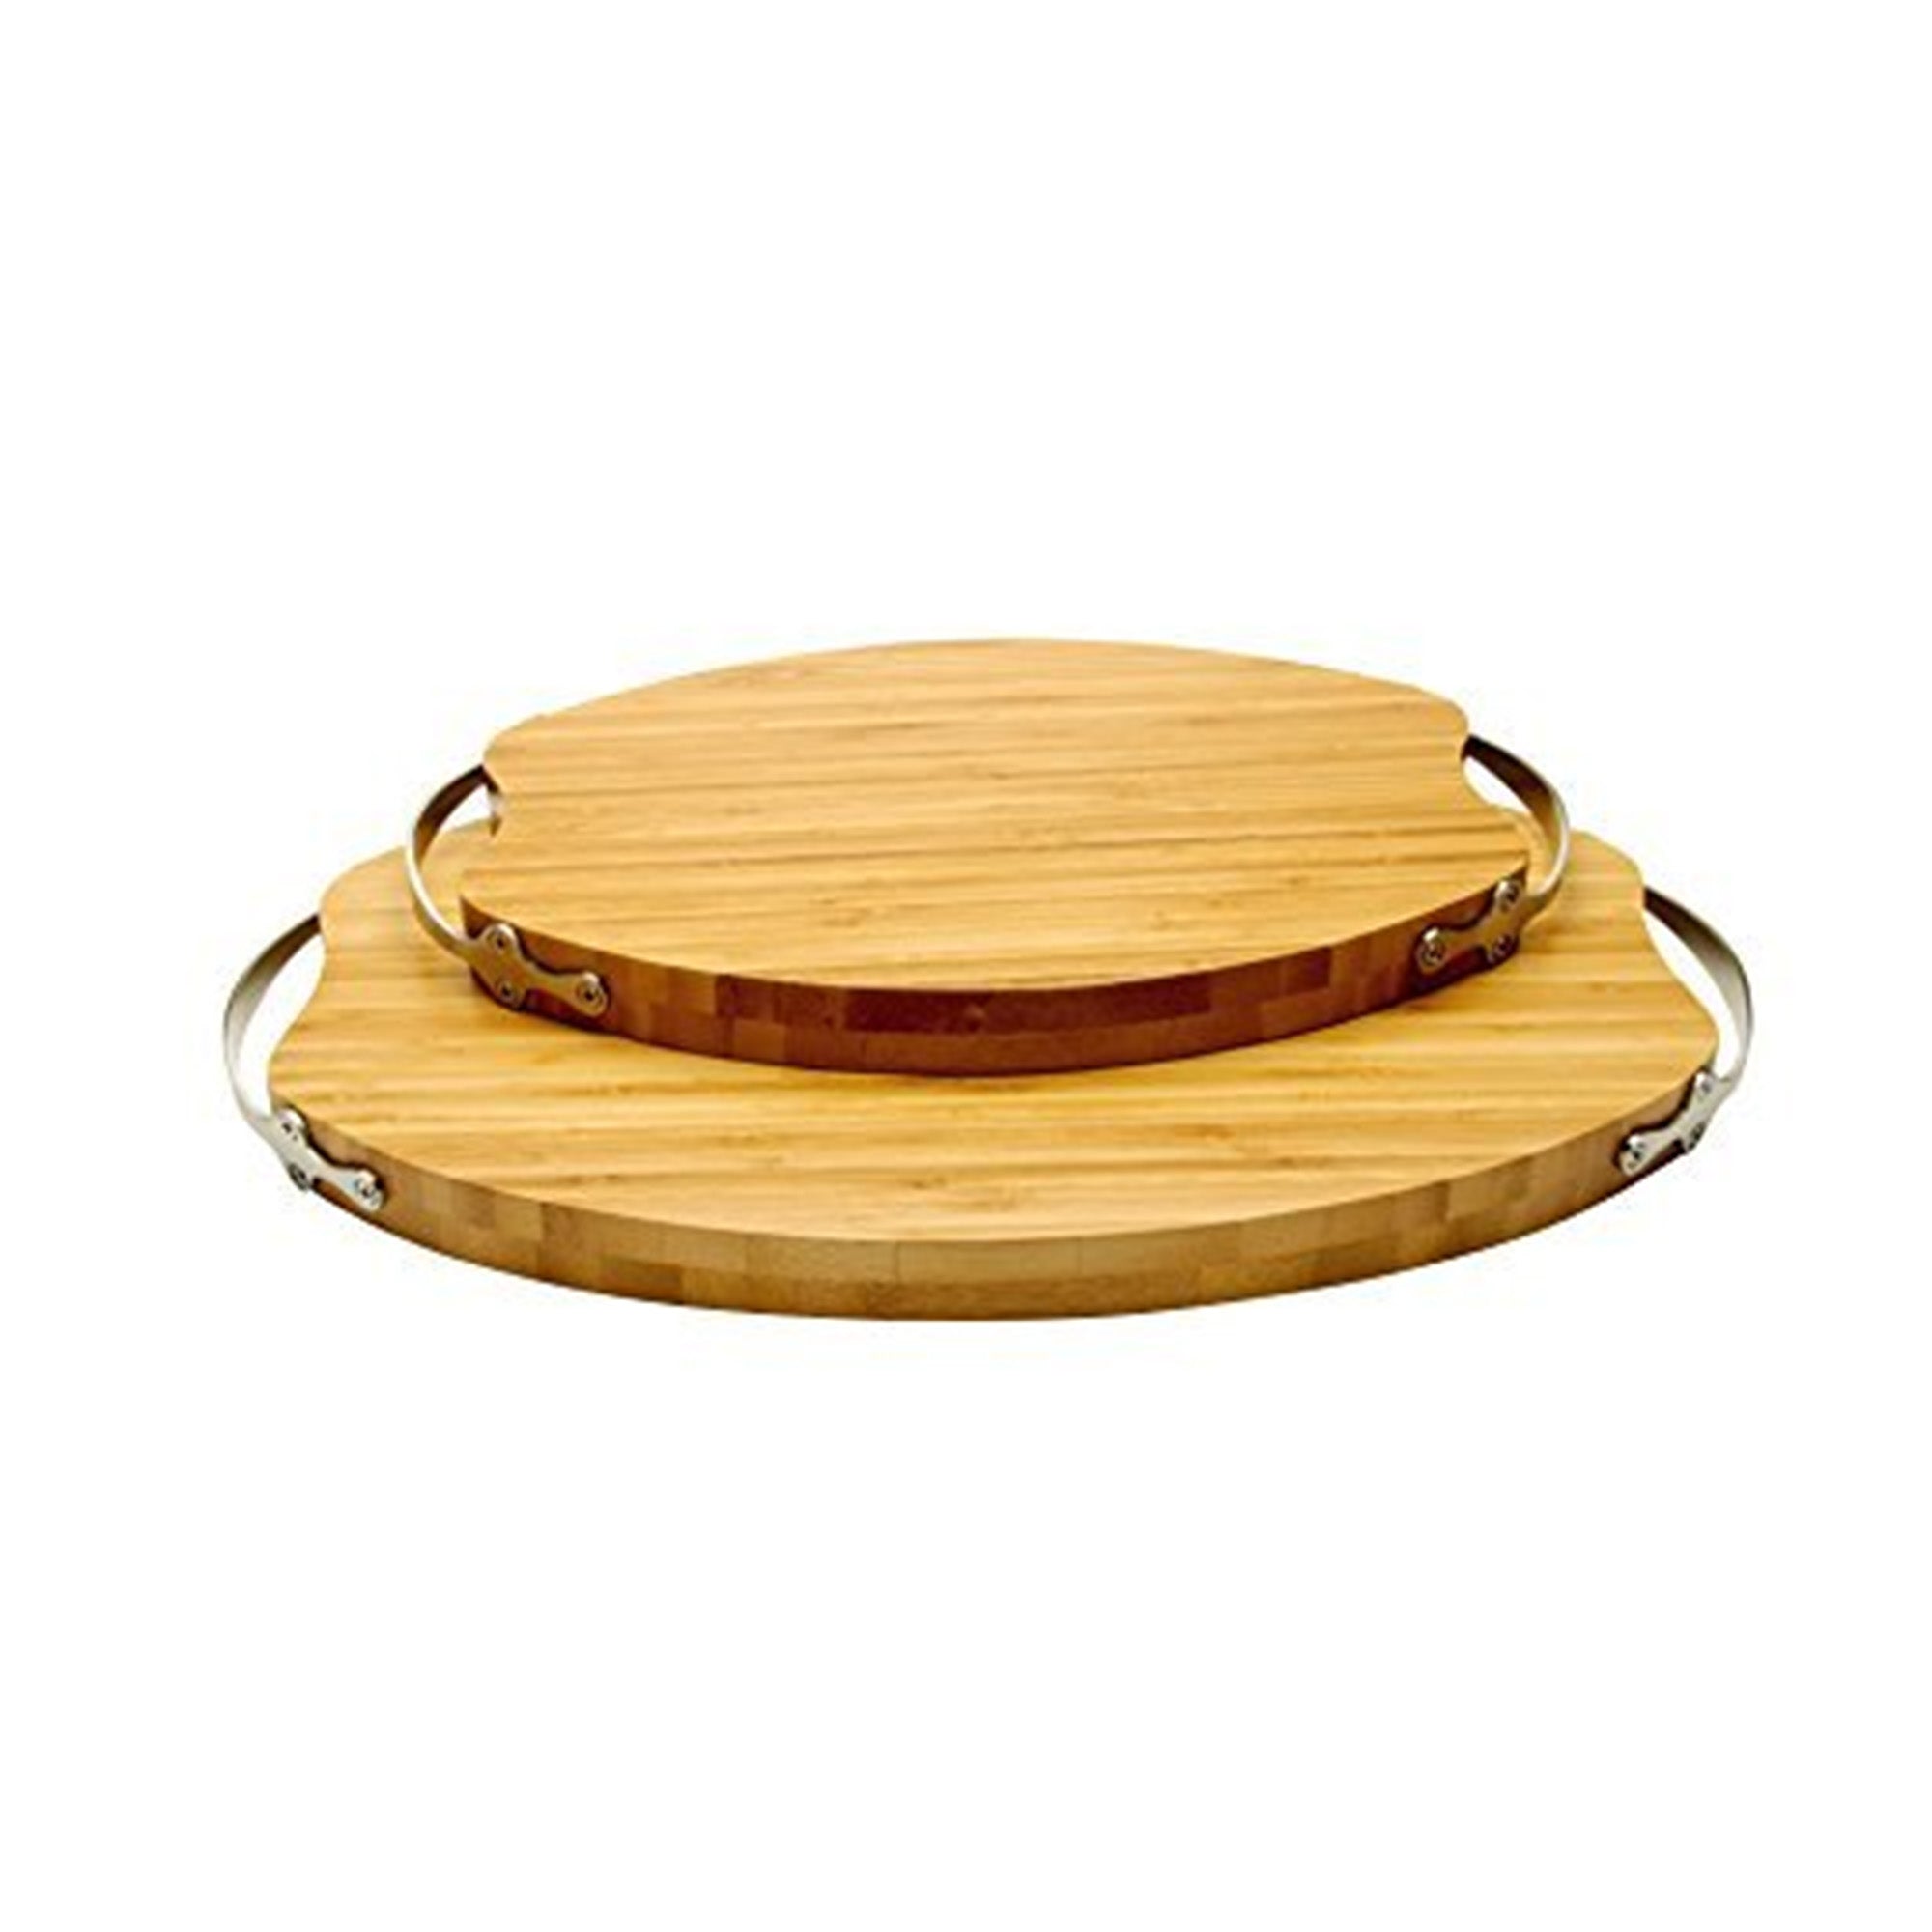 La Cote Multi Use Bamboo Cheese Bread Cutting Serving Board (Large)